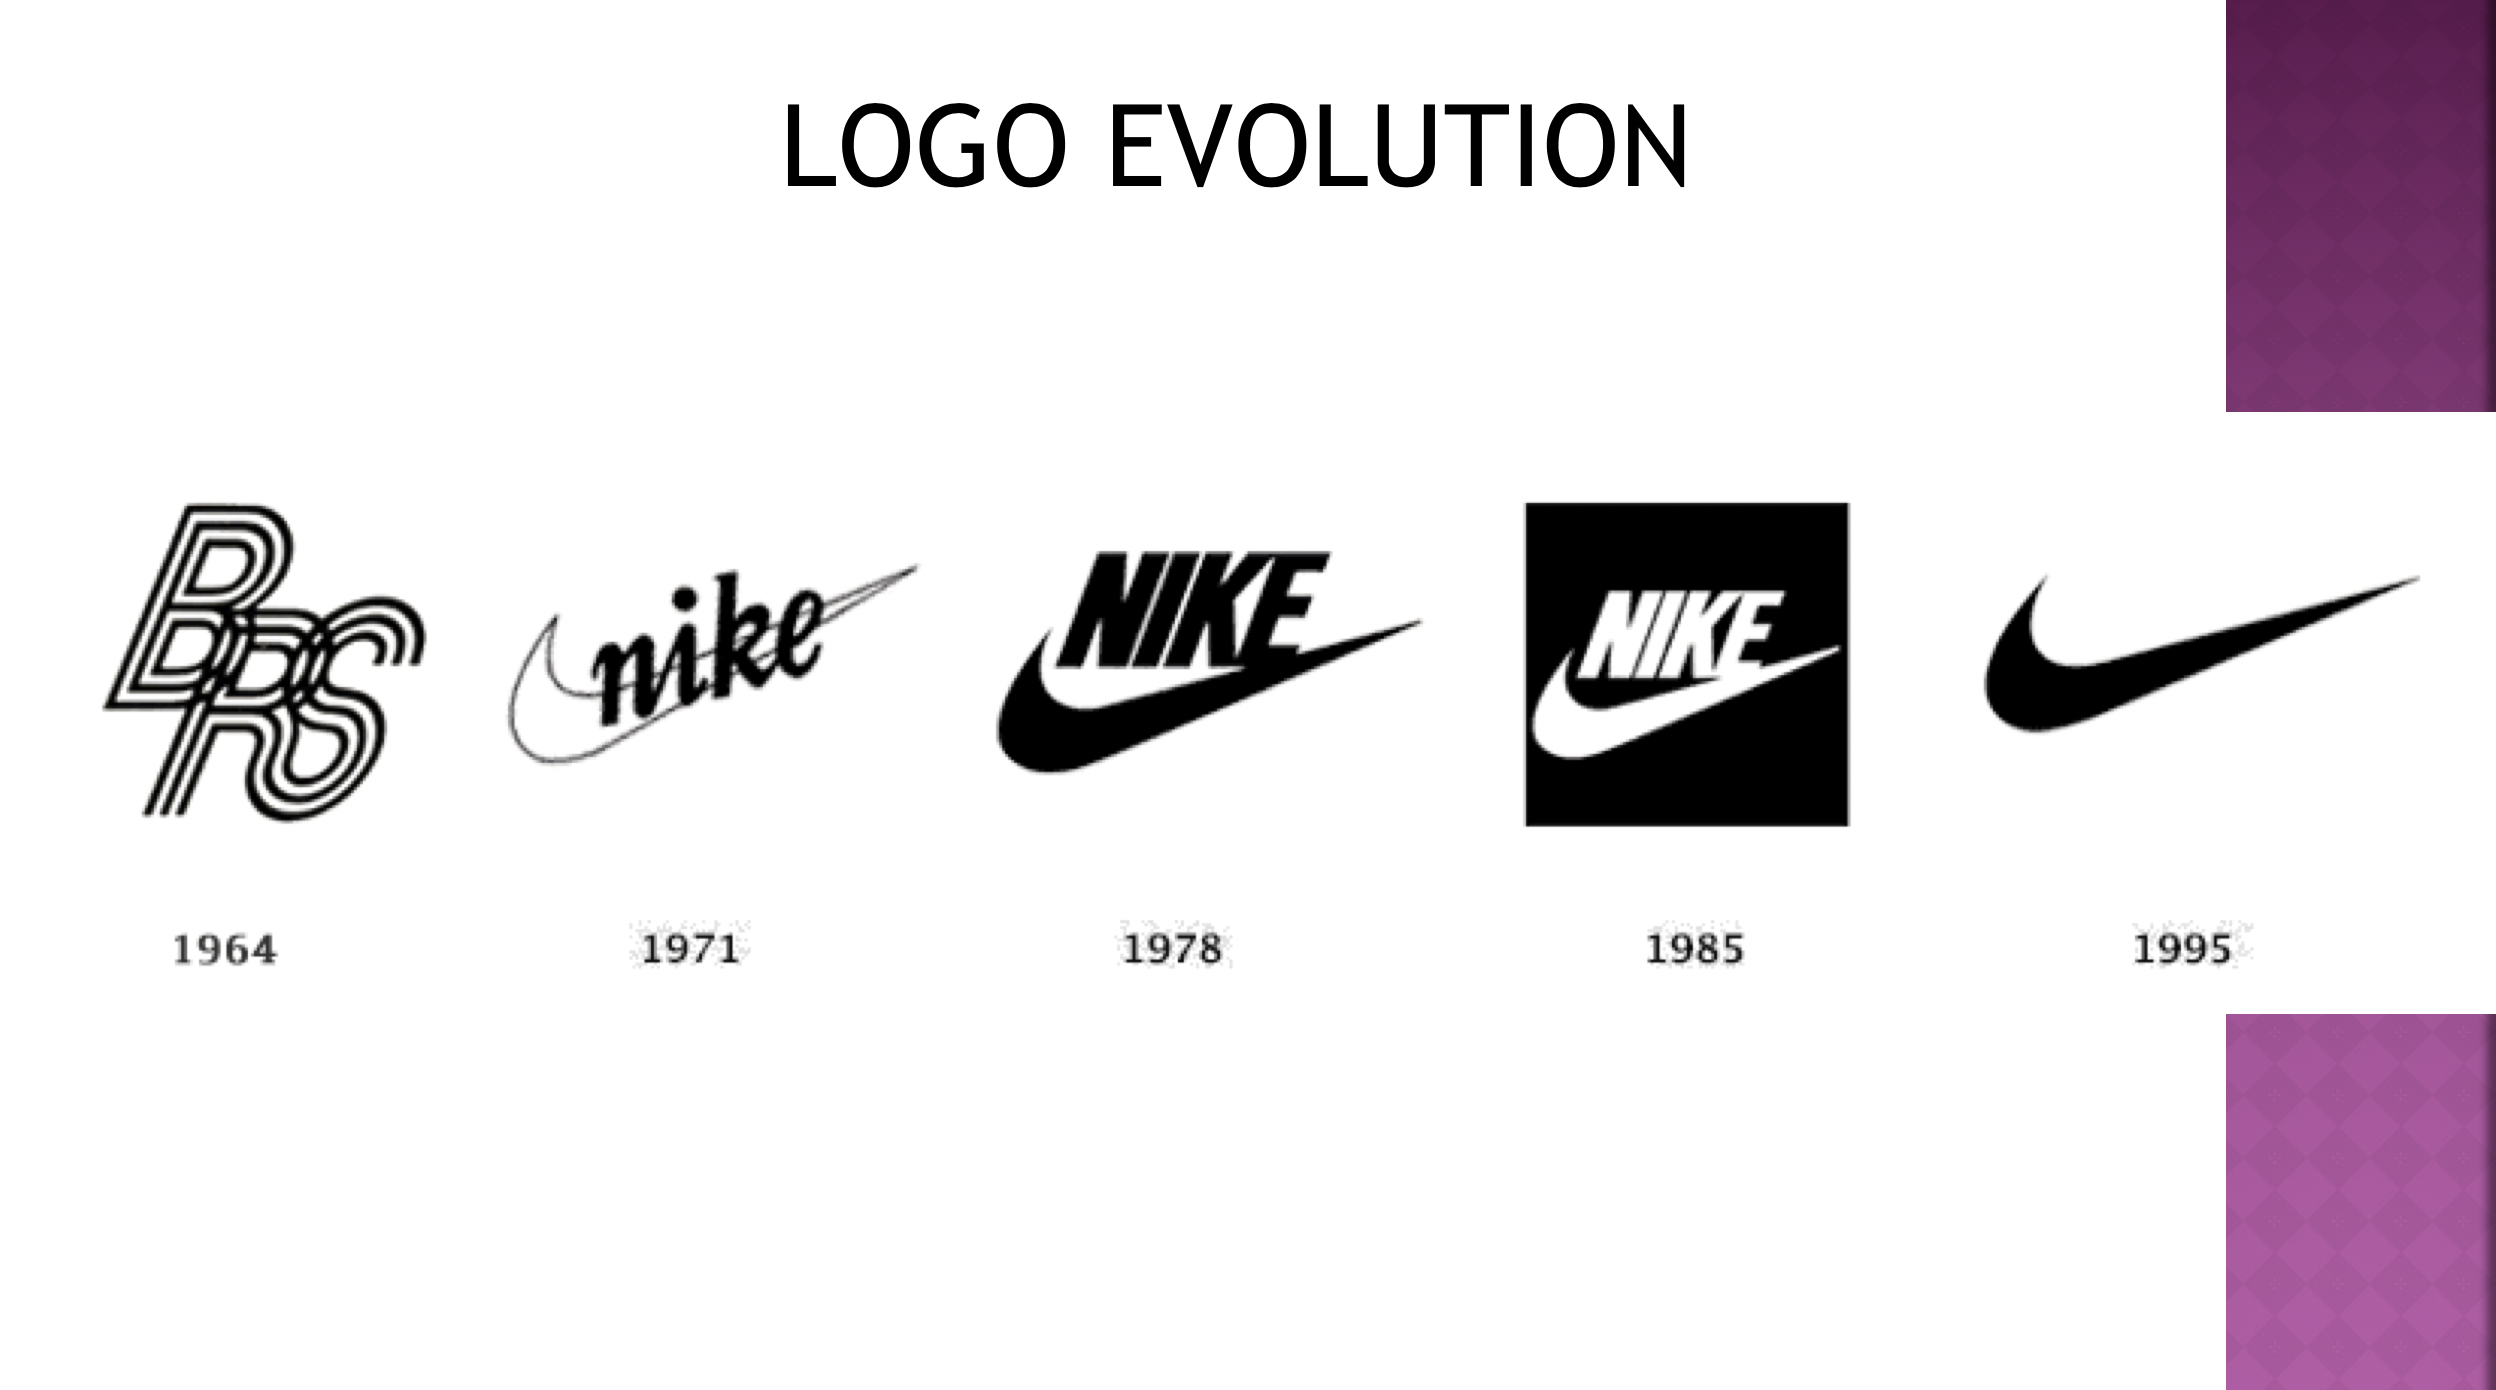 evolution of the nike logo